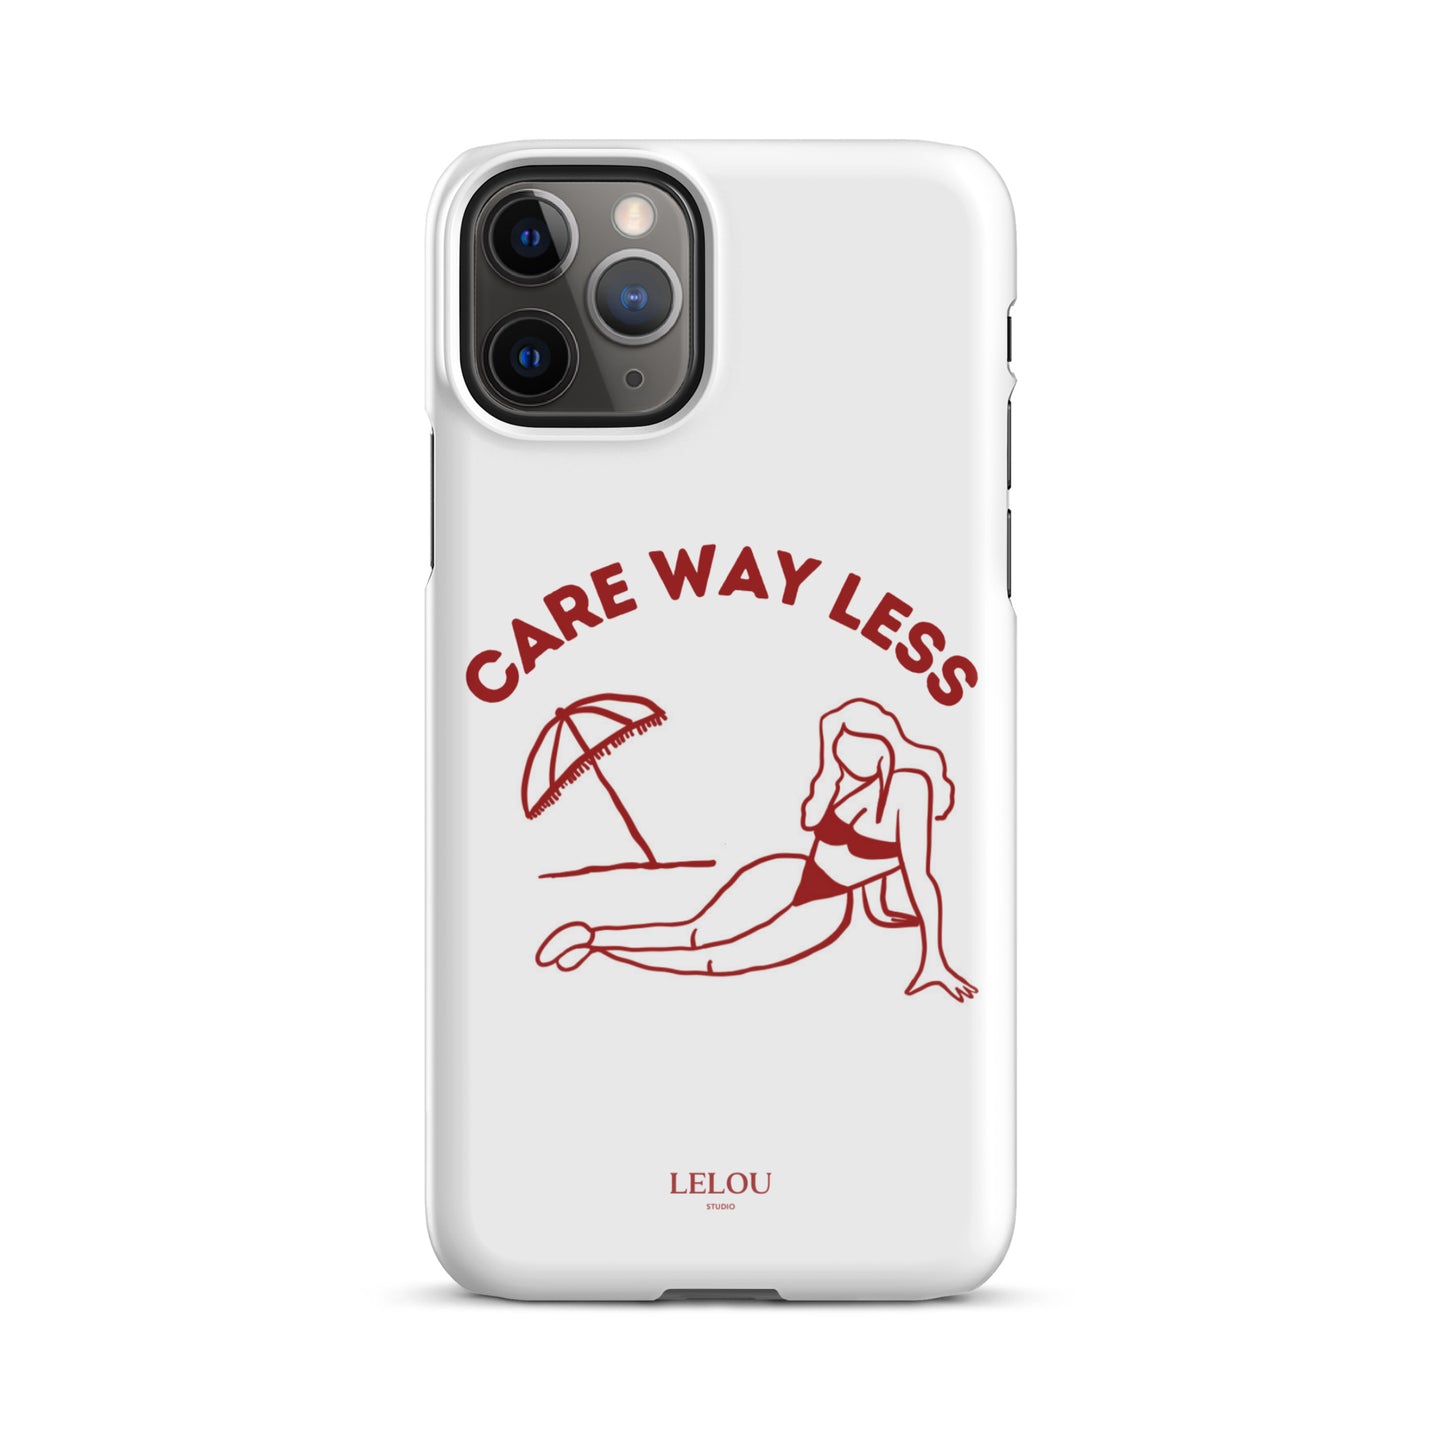 Care way less